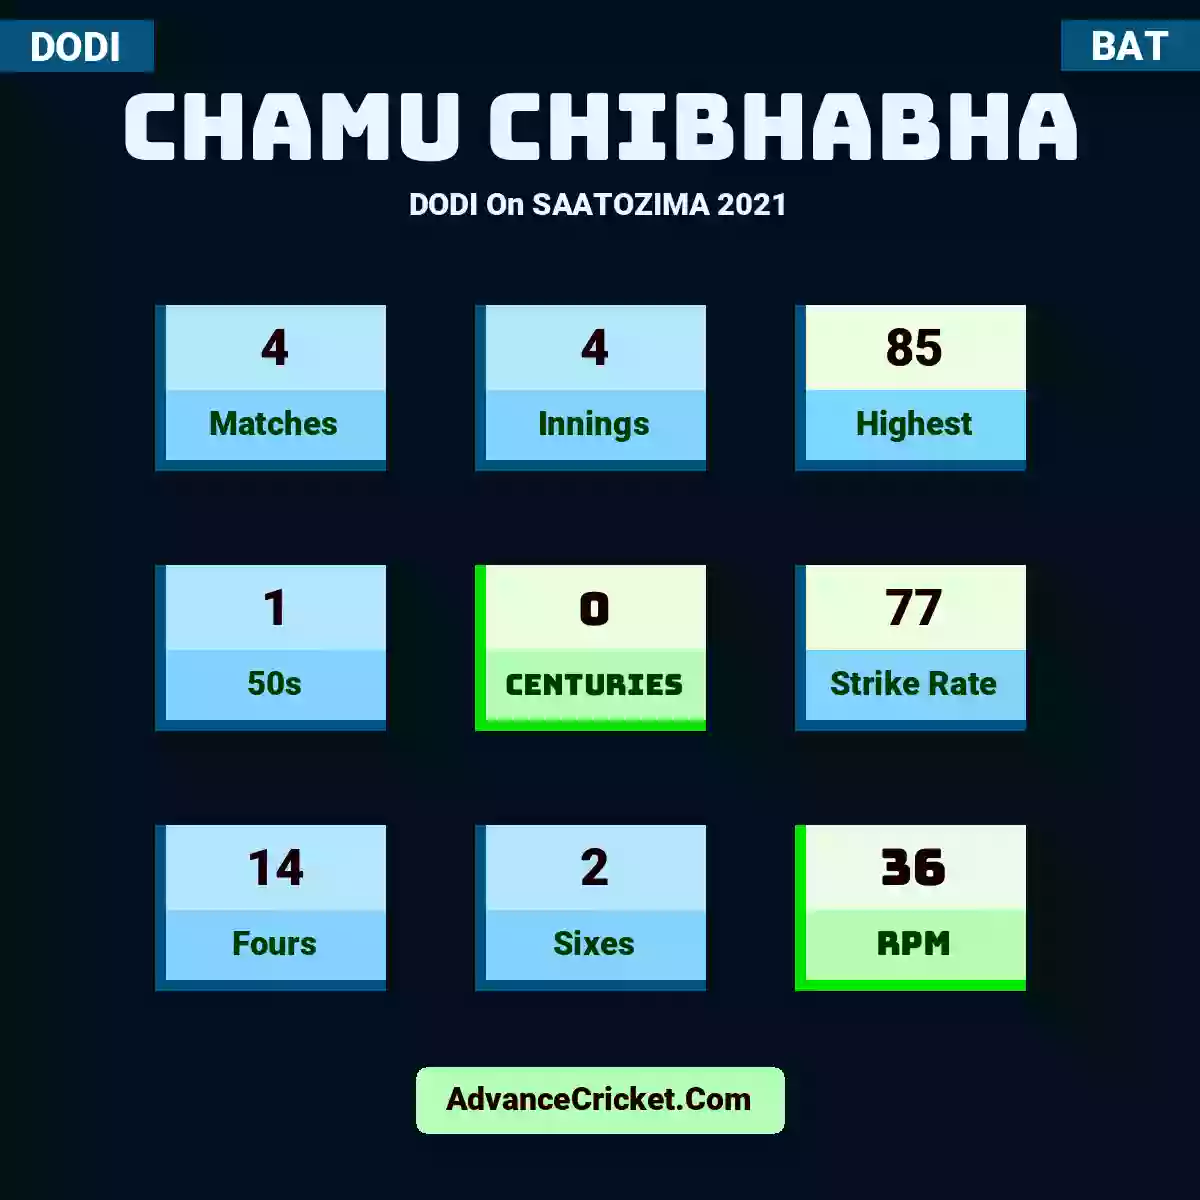 Chamu Chibhabha DODI  On SAATOZIMA 2021, Chamu Chibhabha played 4 matches, scored 85 runs as highest, 1 half-centuries, and 0 centuries, with a strike rate of 77. C.Chibhabha hit 14 fours and 2 sixes, with an RPM of 36.